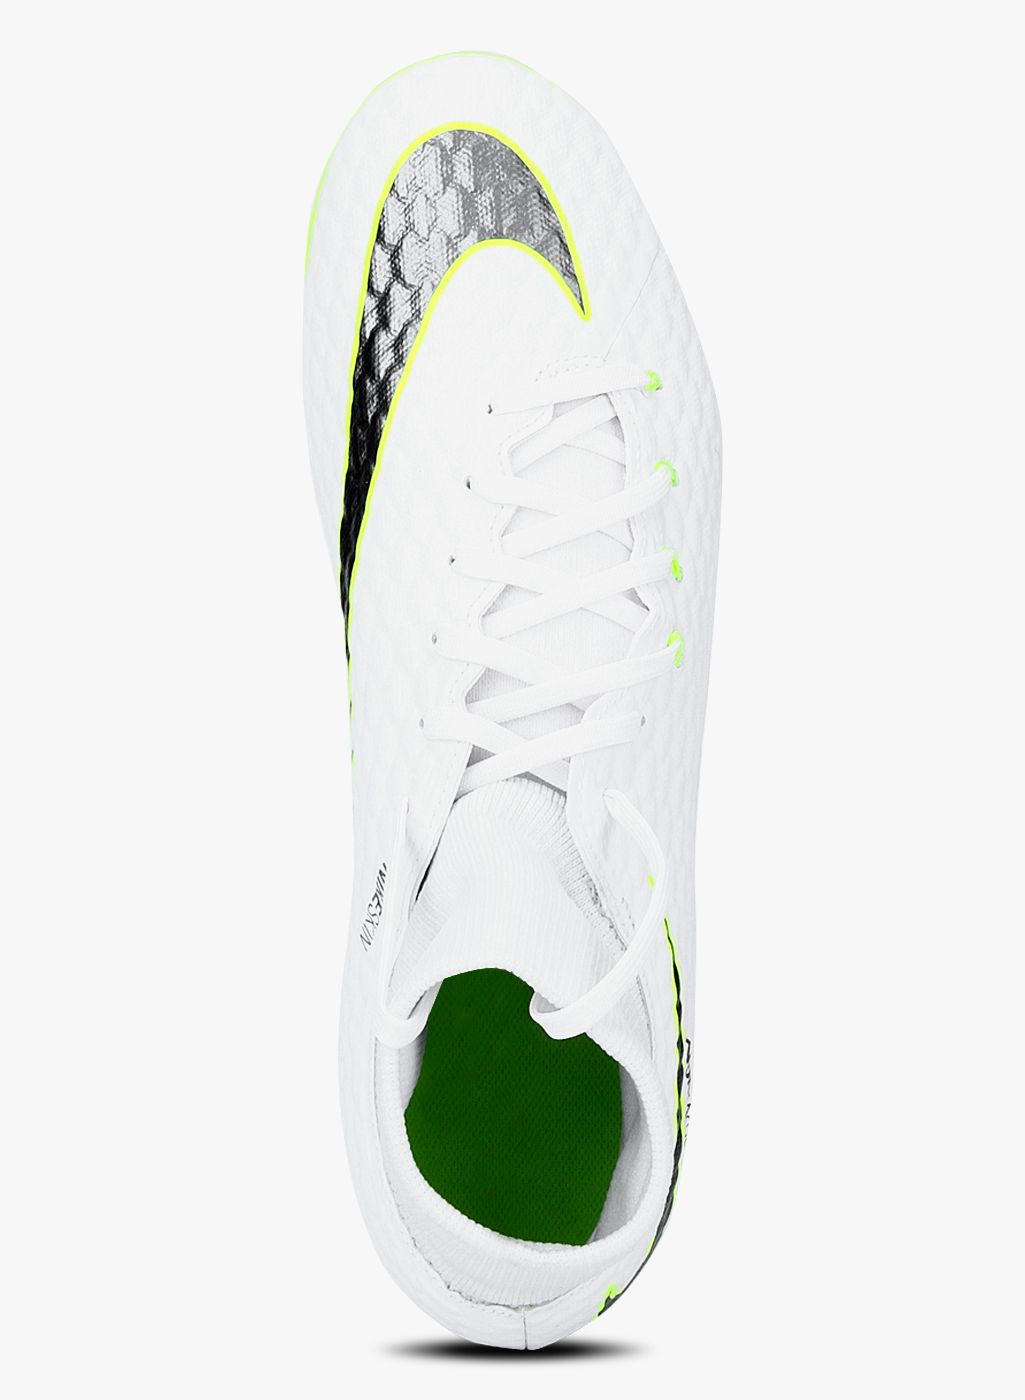 Nike HypervenomX Finale II TF Shoes Football BOOTS